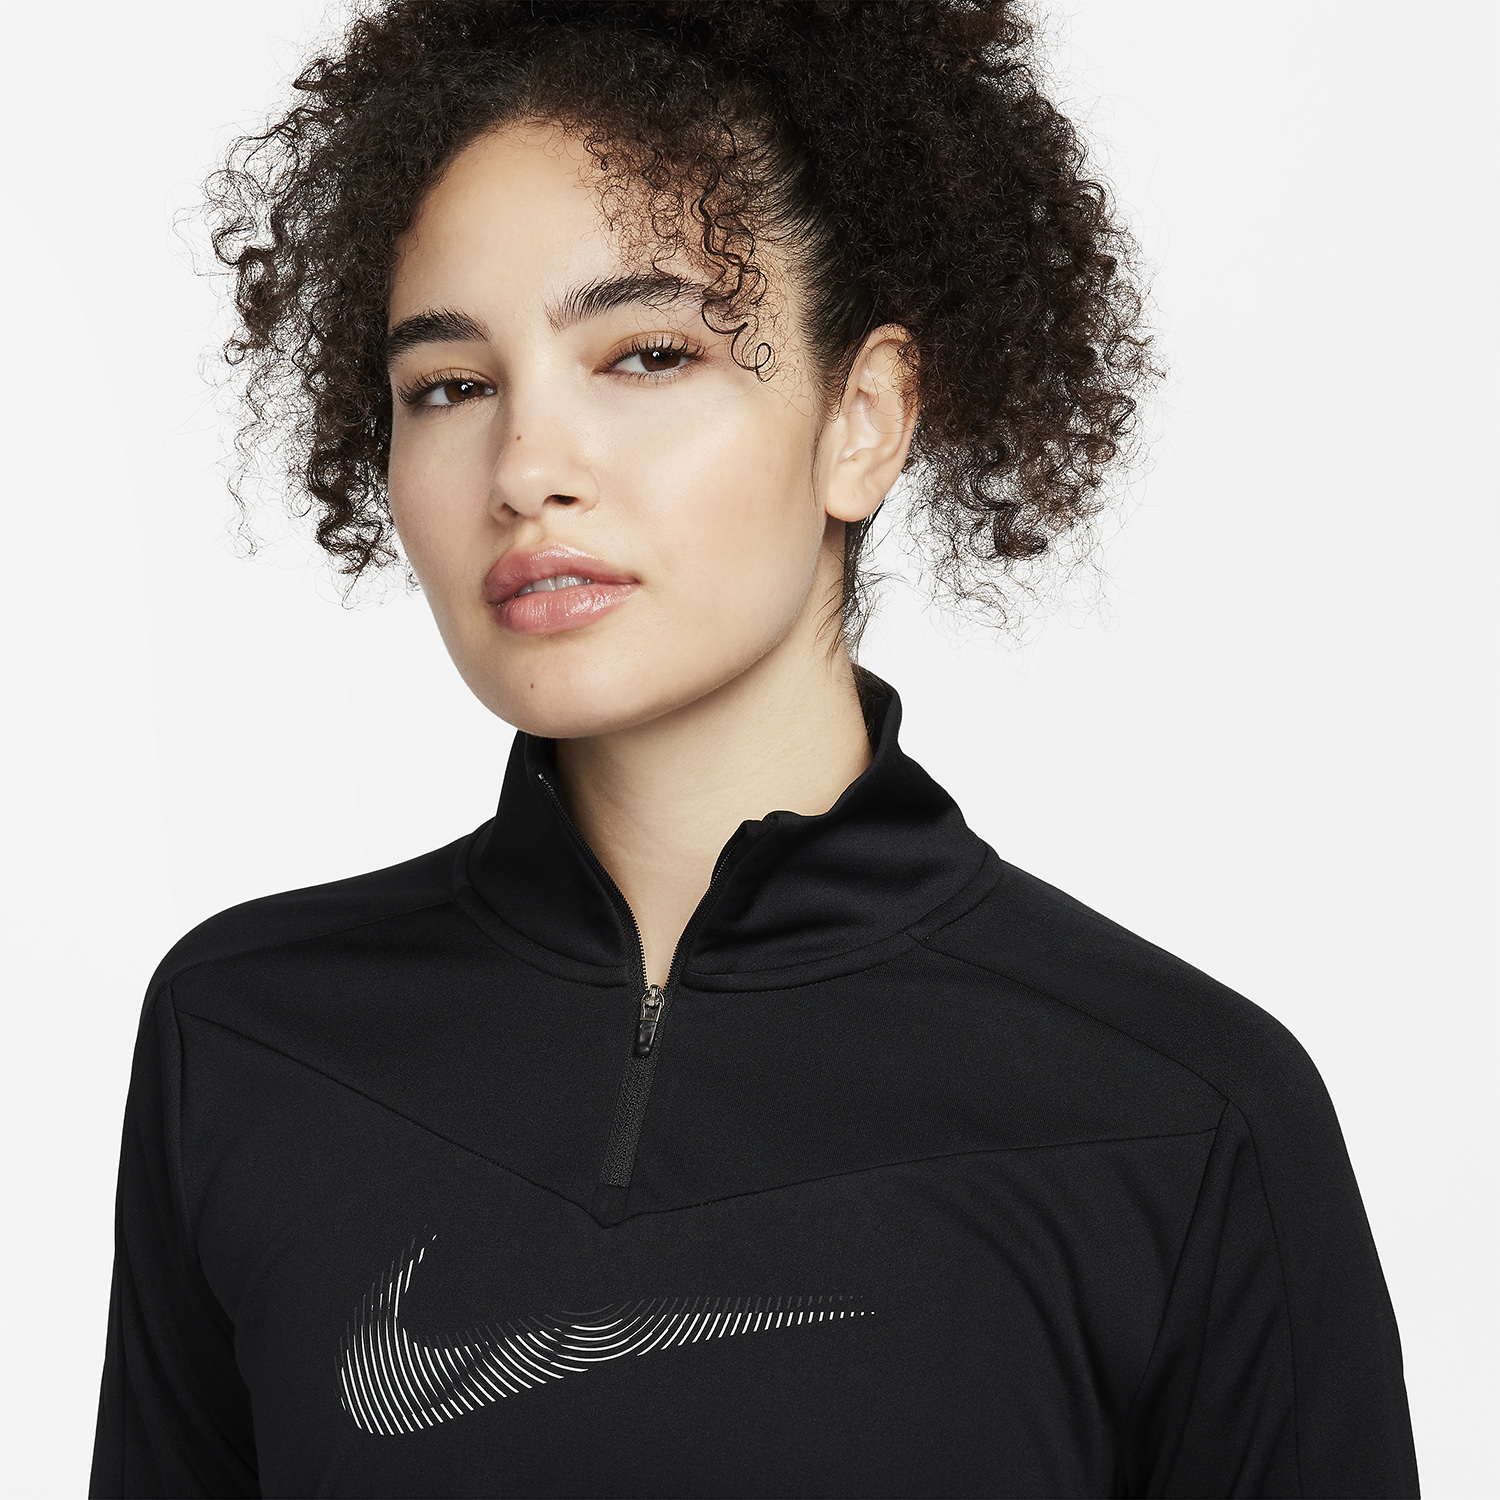 Nike Dri-FIT Swoosh Pacer Shirt - Black/Cool Grey